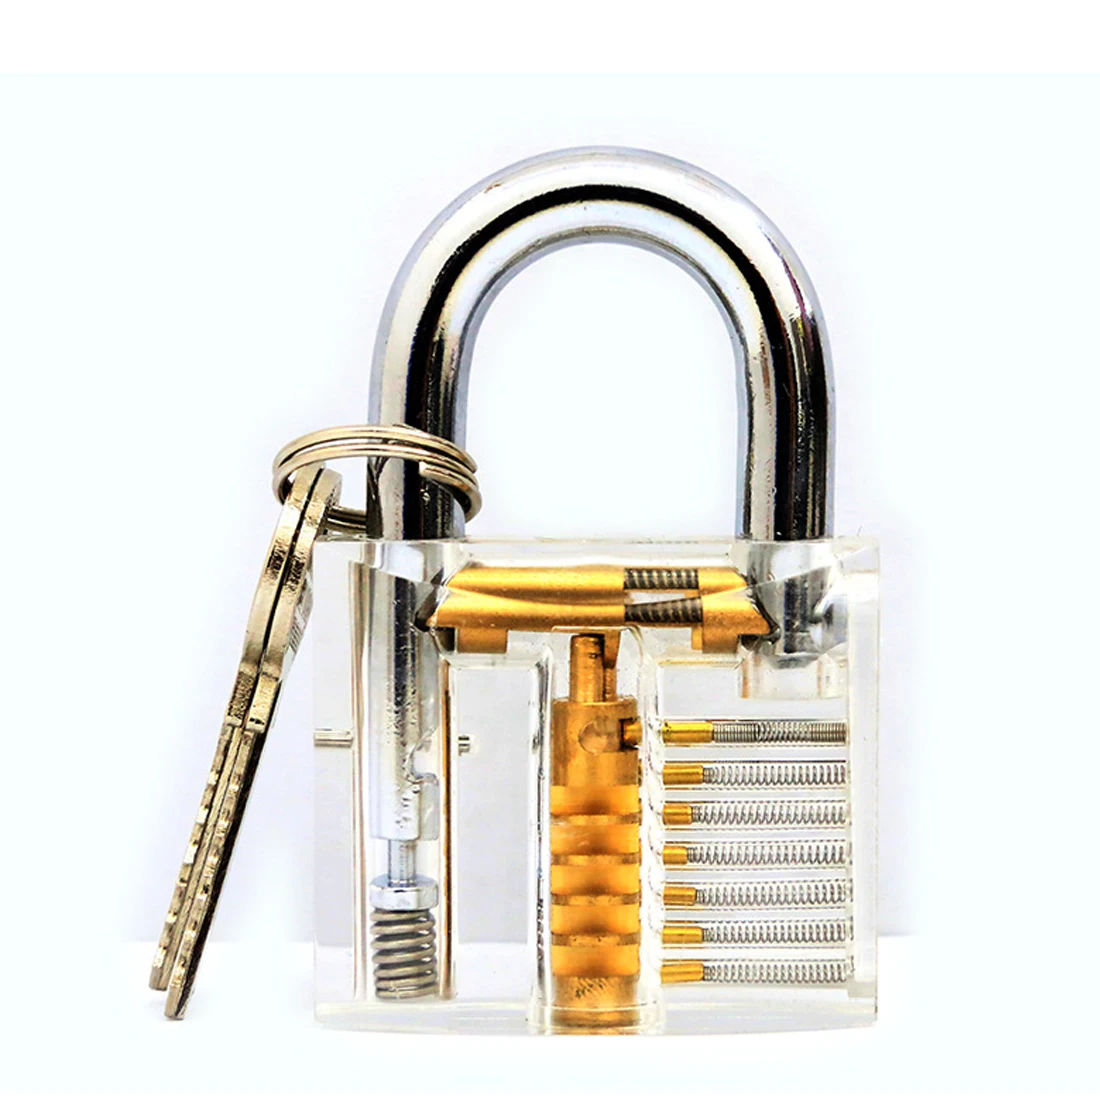 

1pcs Cutaway Inside View Of Practice Transparent Padlock Lock Training Skill Pick View Padlock For Locksmith With Smart Keys